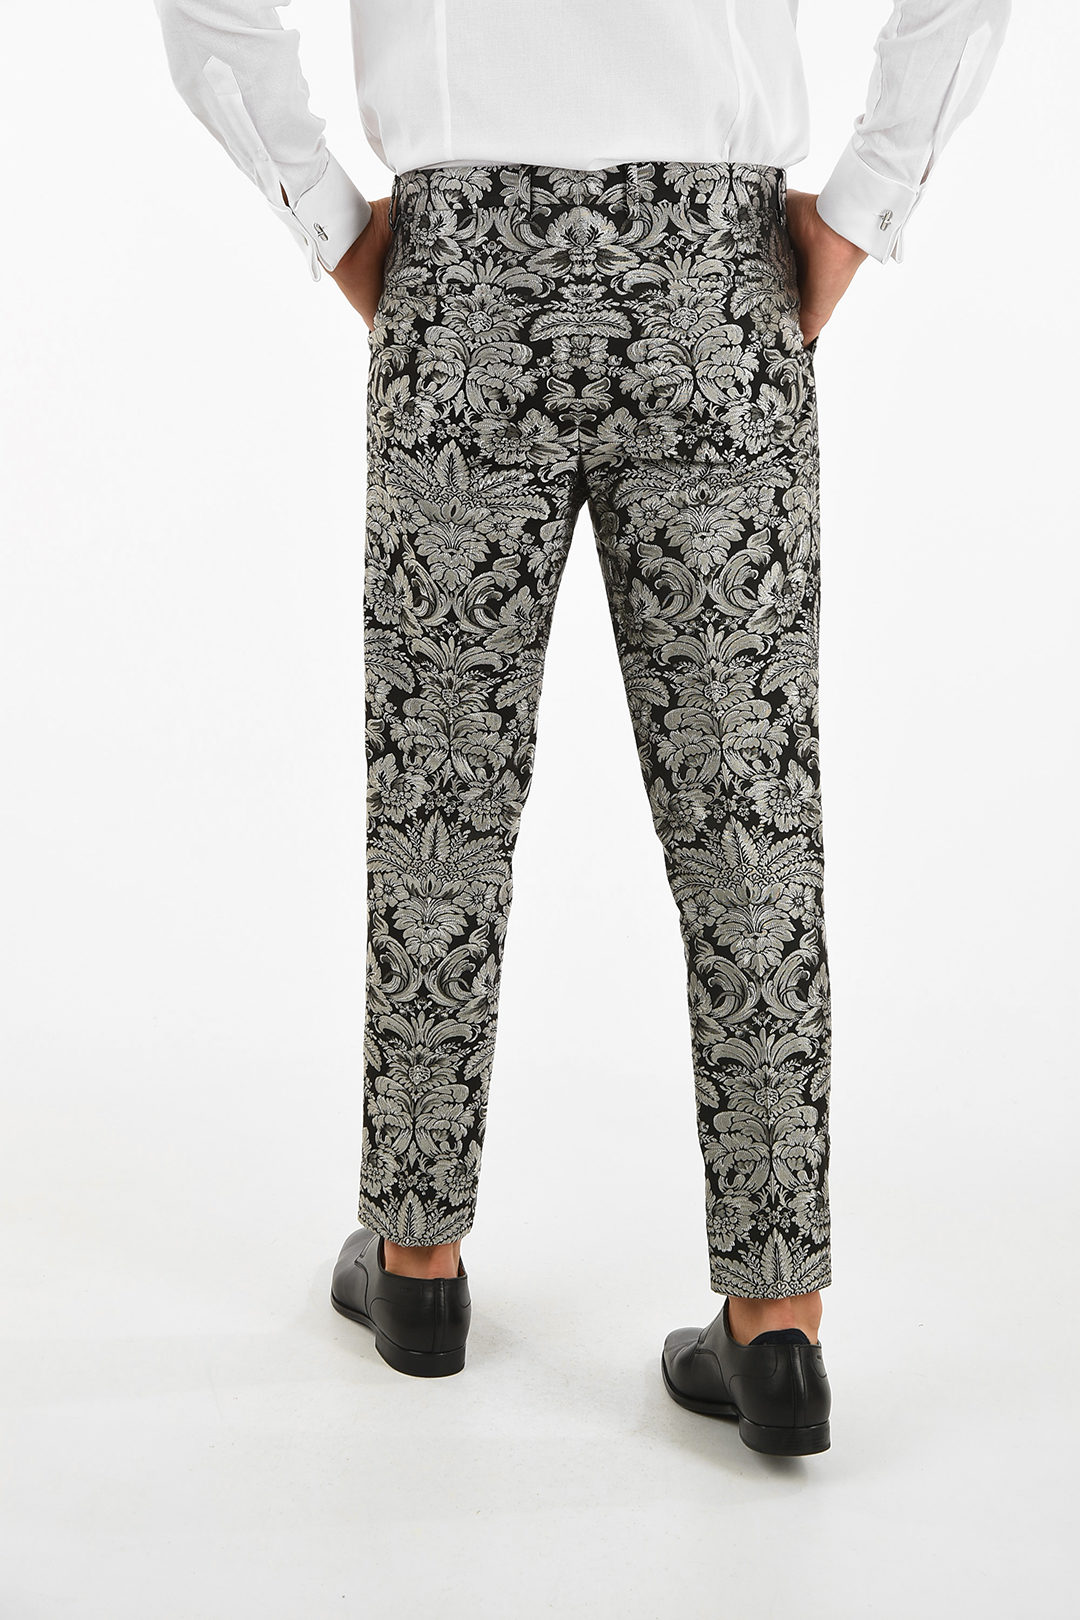 Dolce & Gabbana brocade pants men - Glamood Outlet